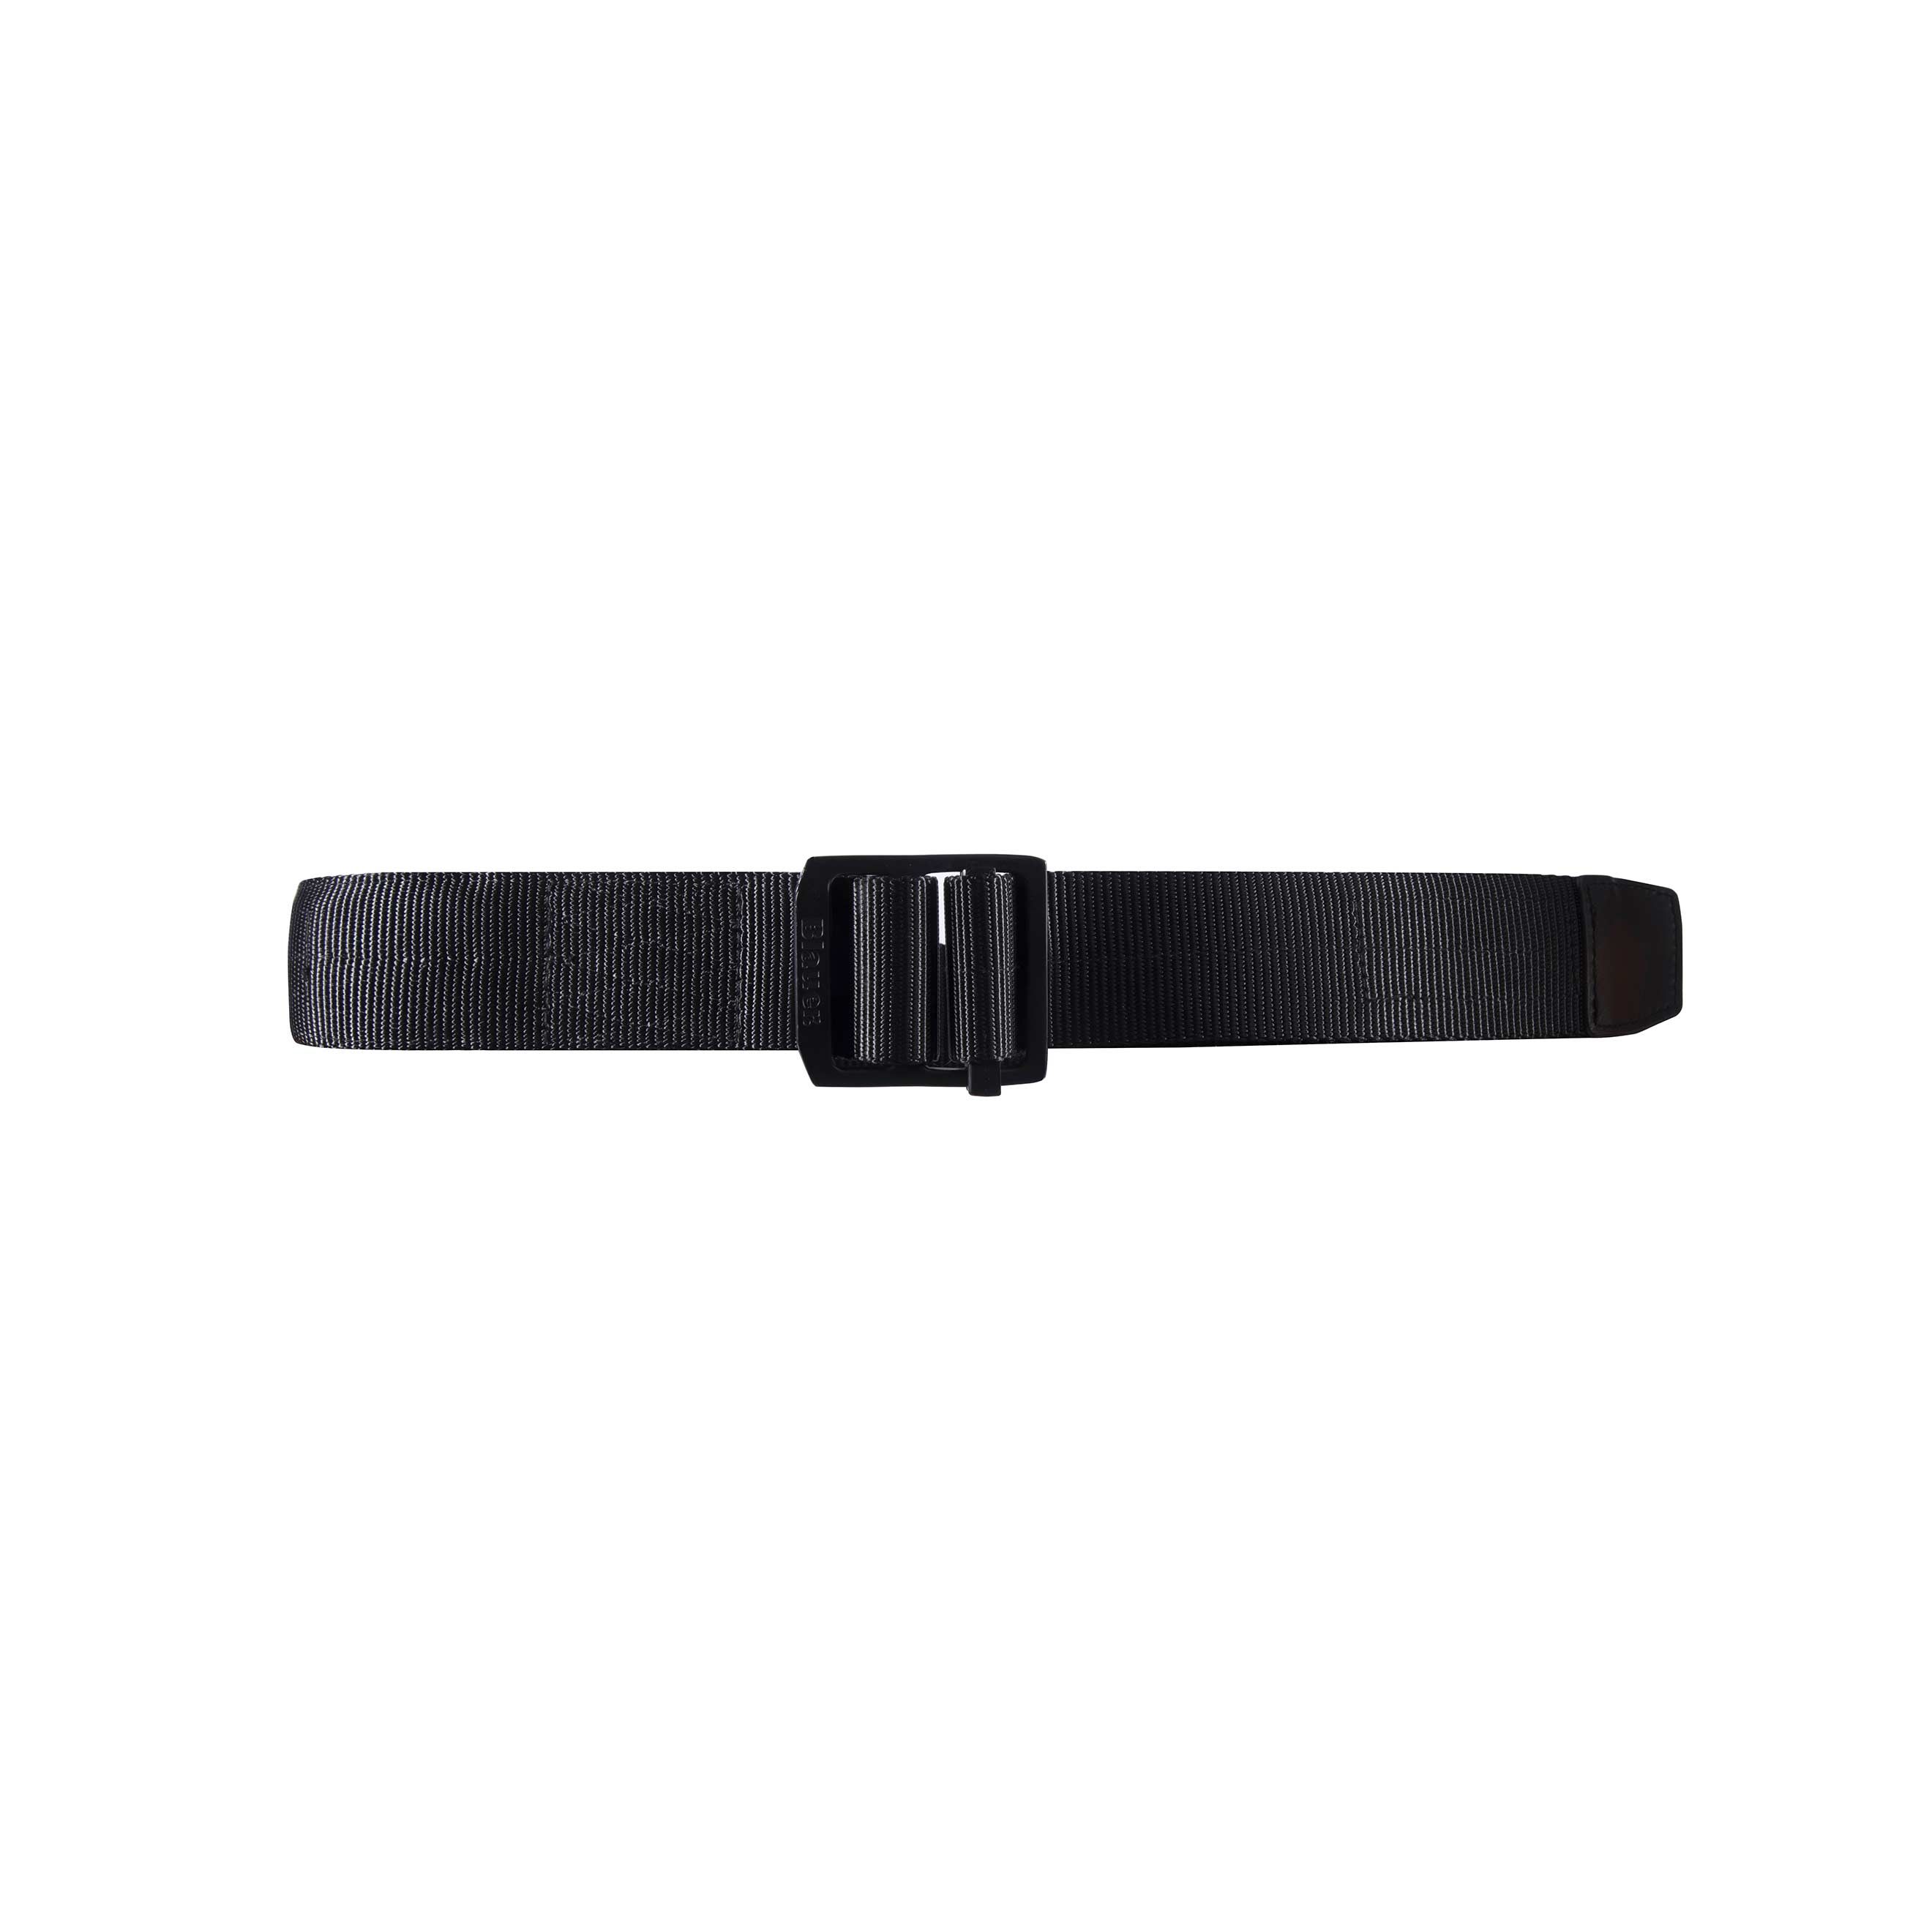 5/8 inch Buckle with Hidden Handcuff Key - Black